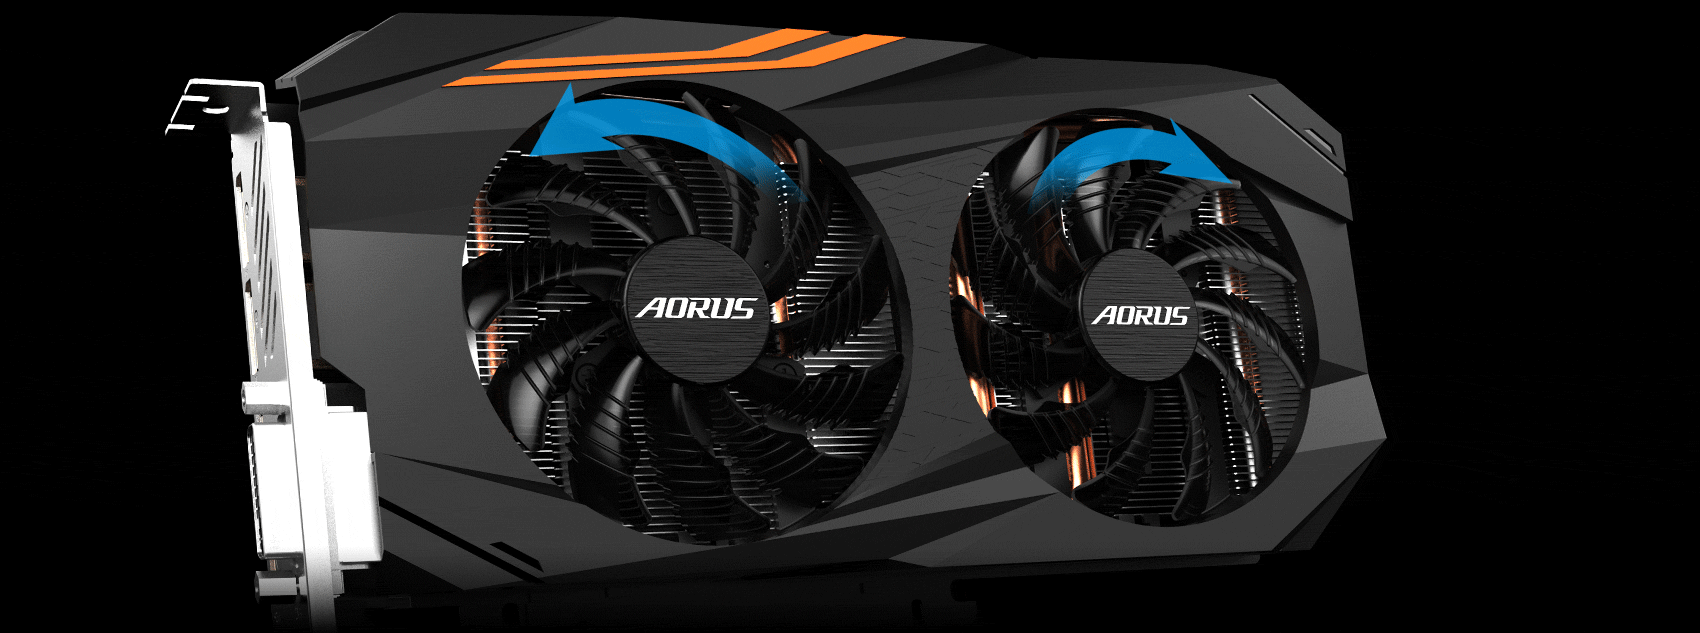 AORUS Radeon™ RX580 8G (rev. 1.0/1.1) Key Features | Graphics Card 